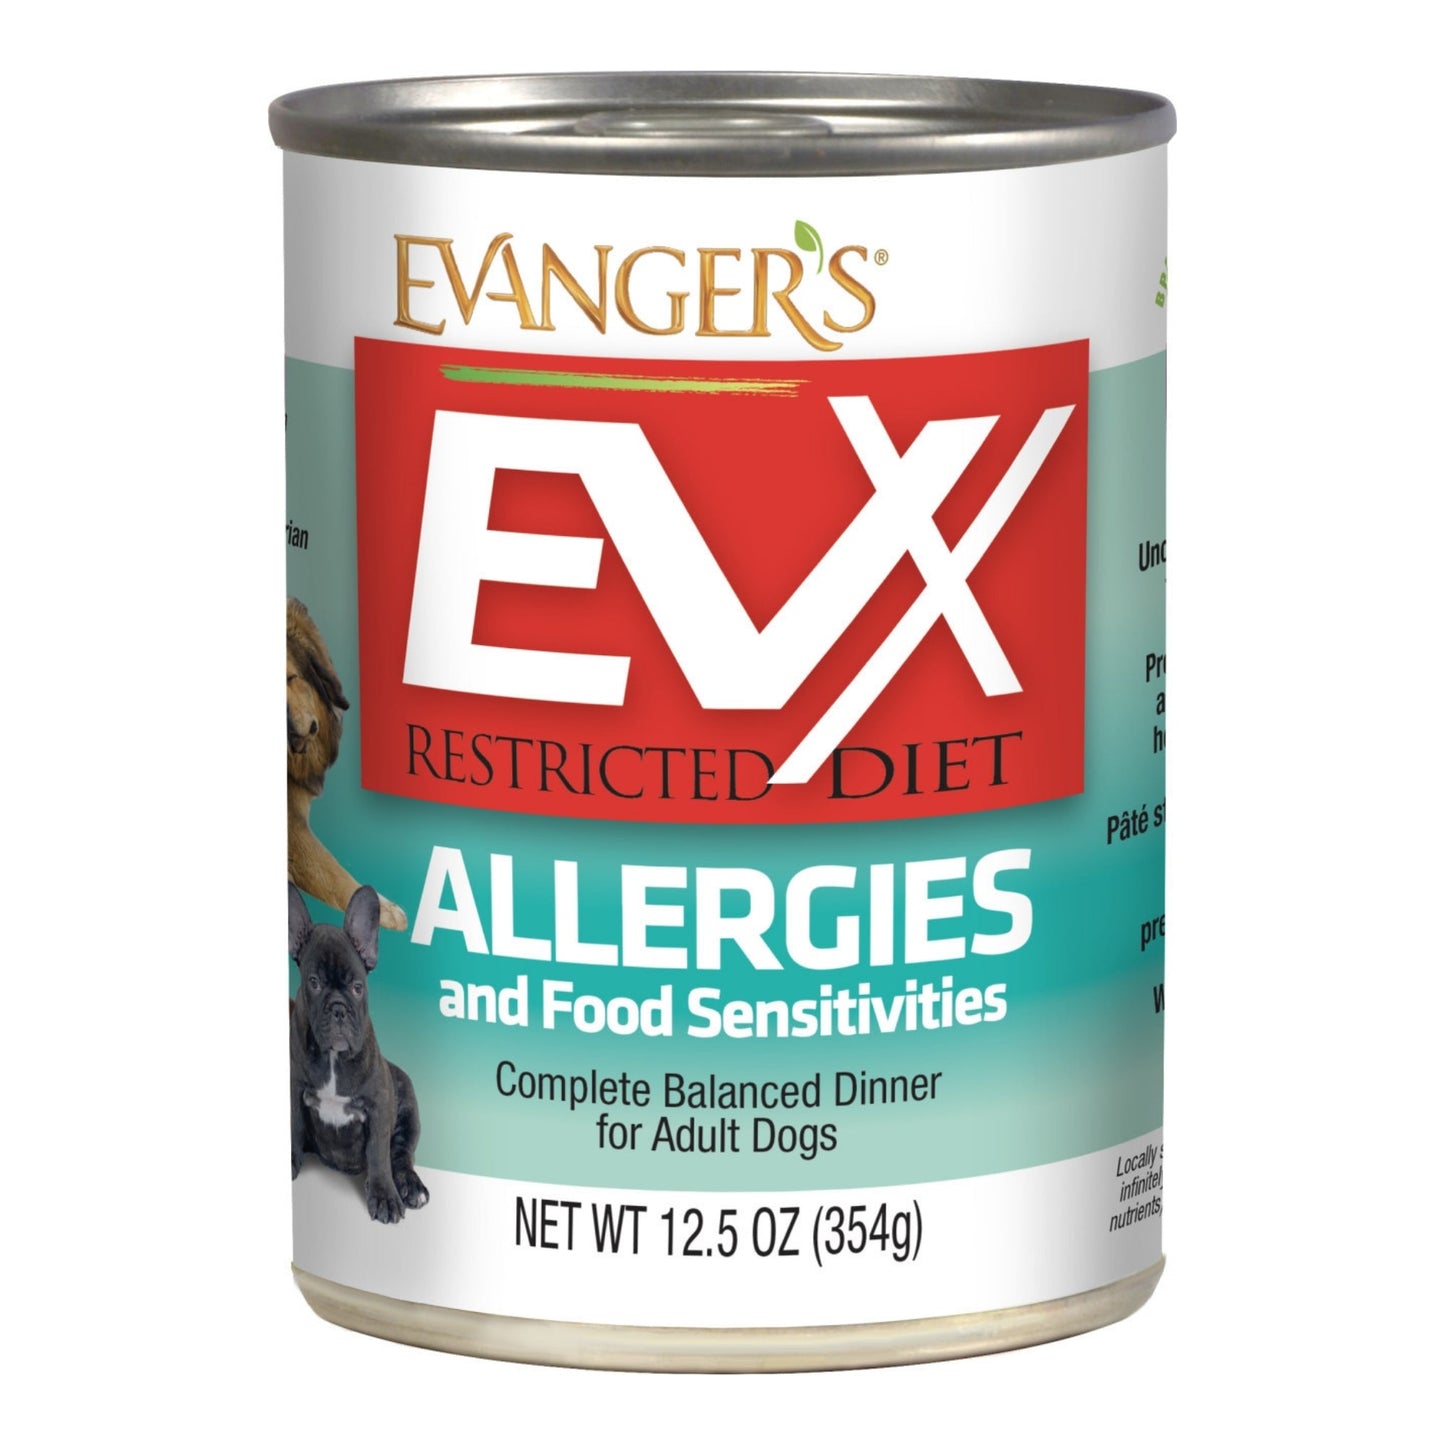 Evanger's EVx Restricted Diet Allergies and Food Sensitivities Wet Dog Food 12.5oz. (Case of 12)